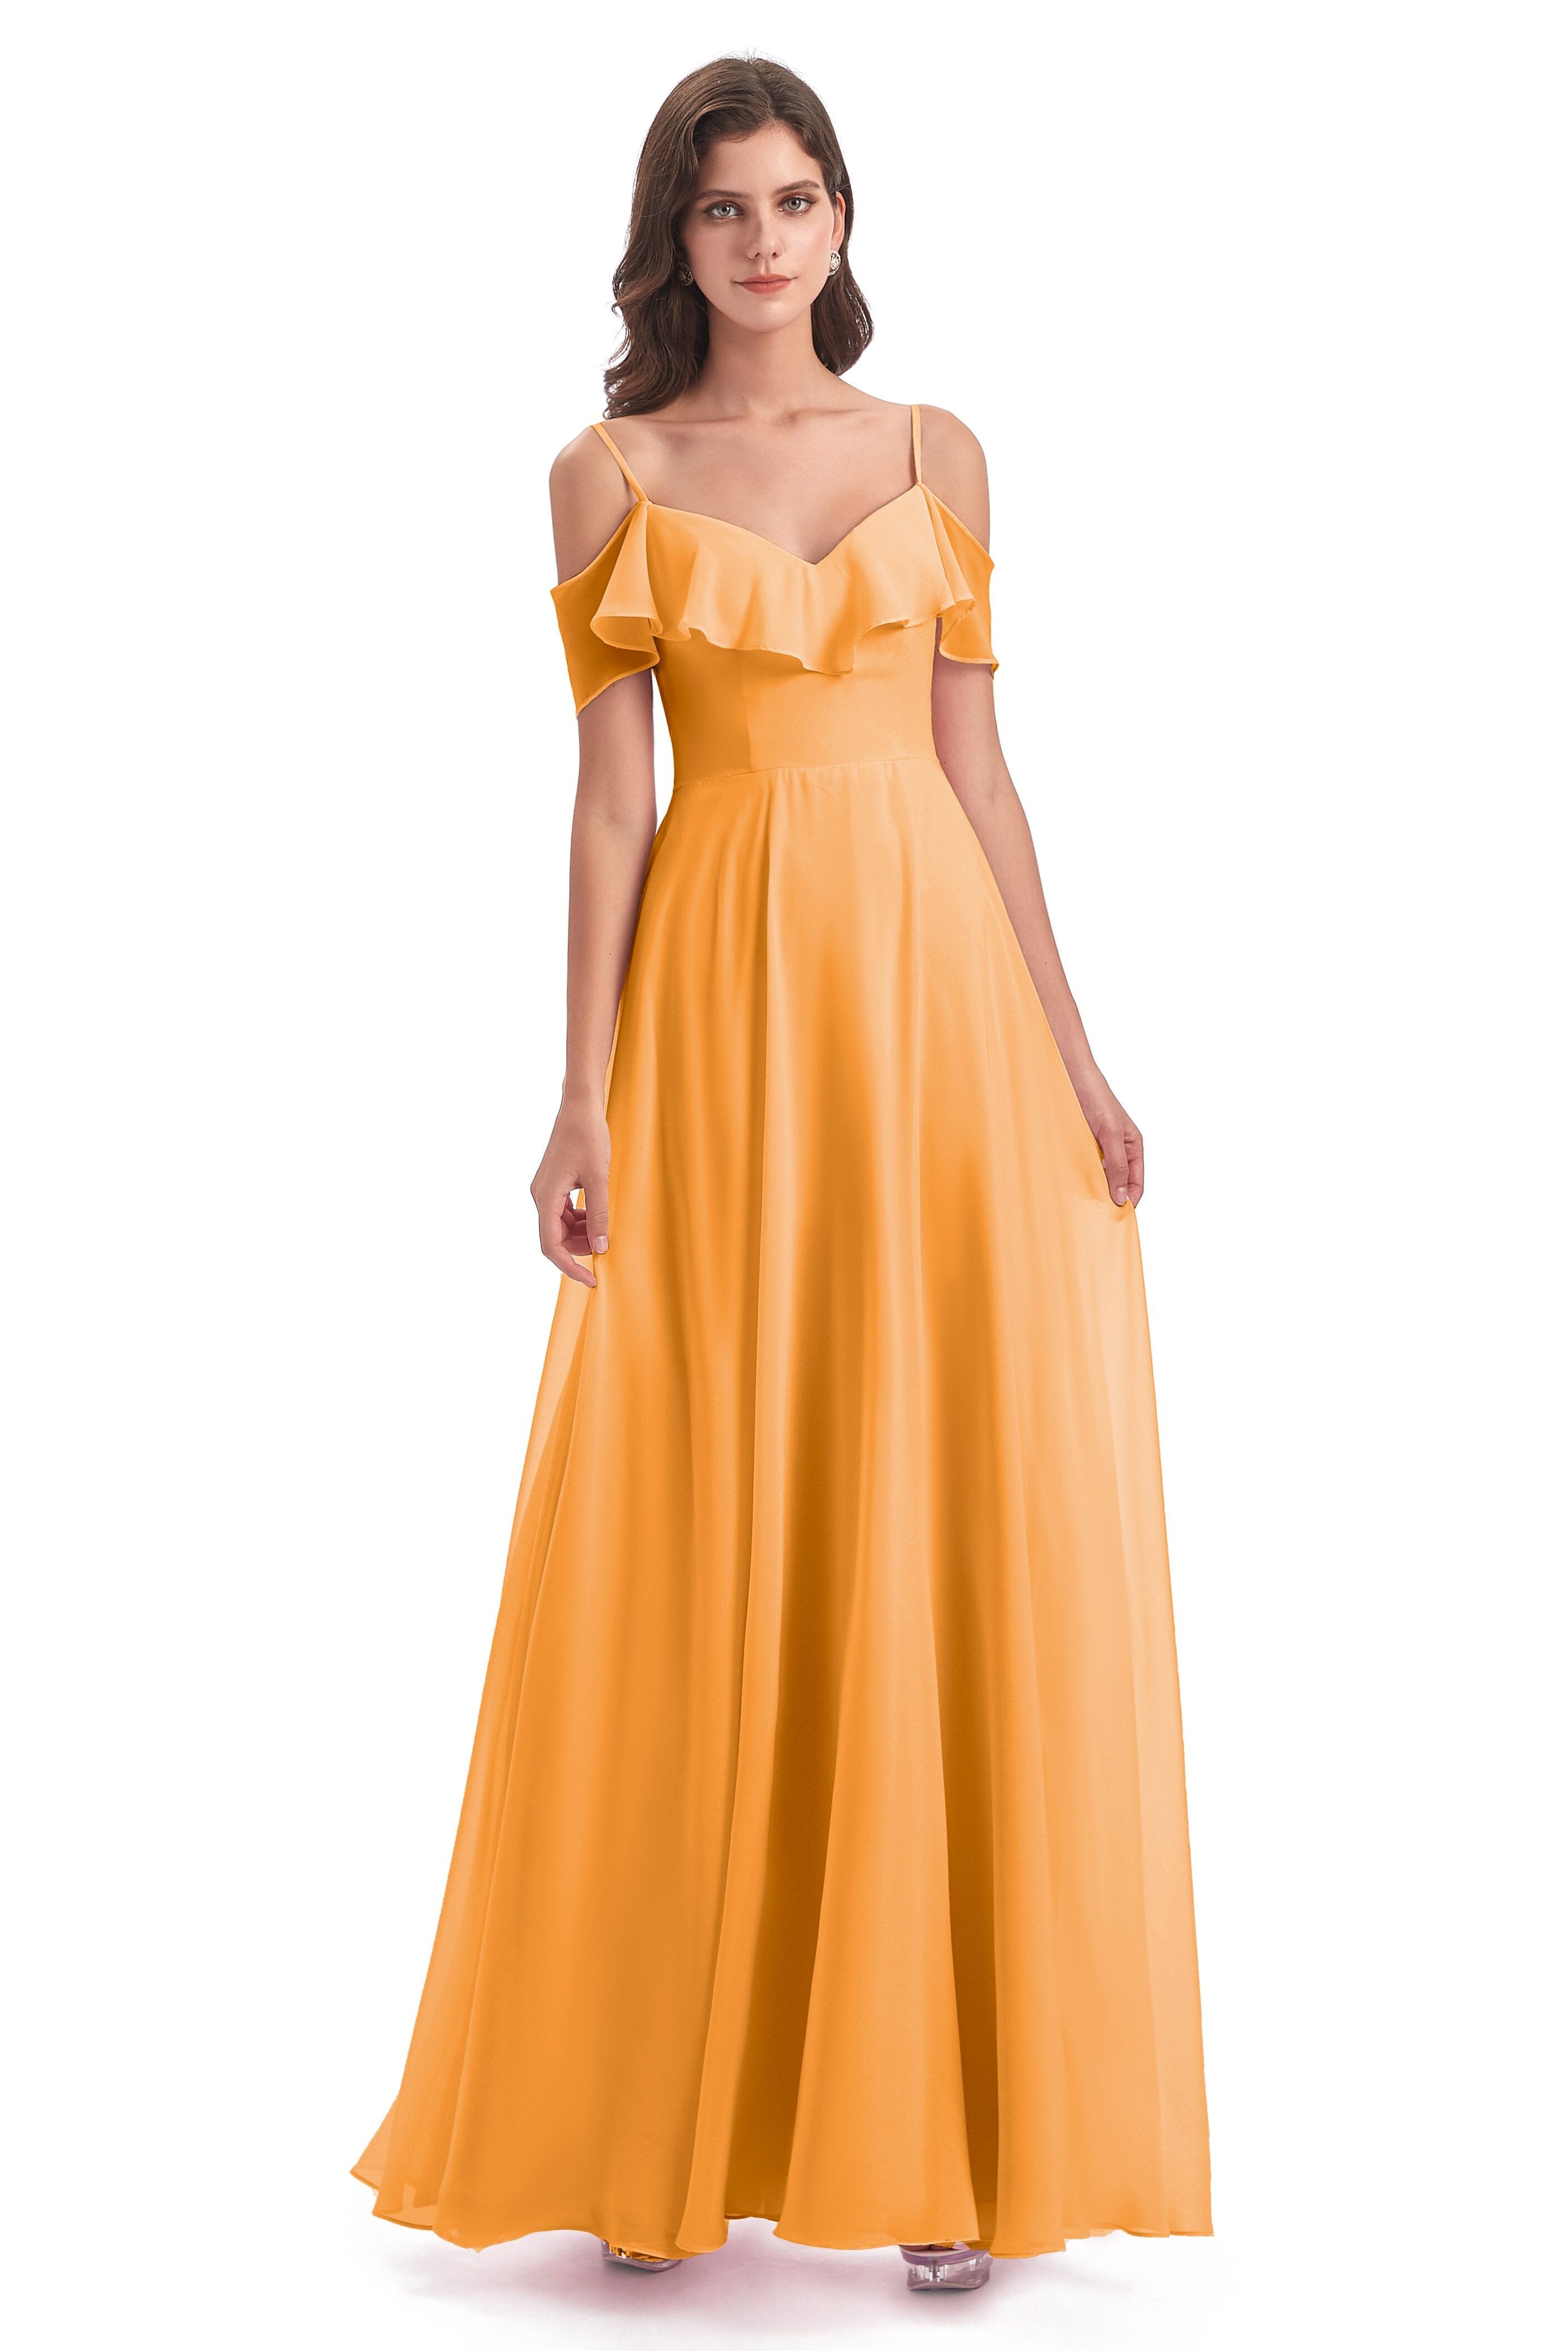 Elizabeth Tangerine bridesmaid dress by Ciccinia